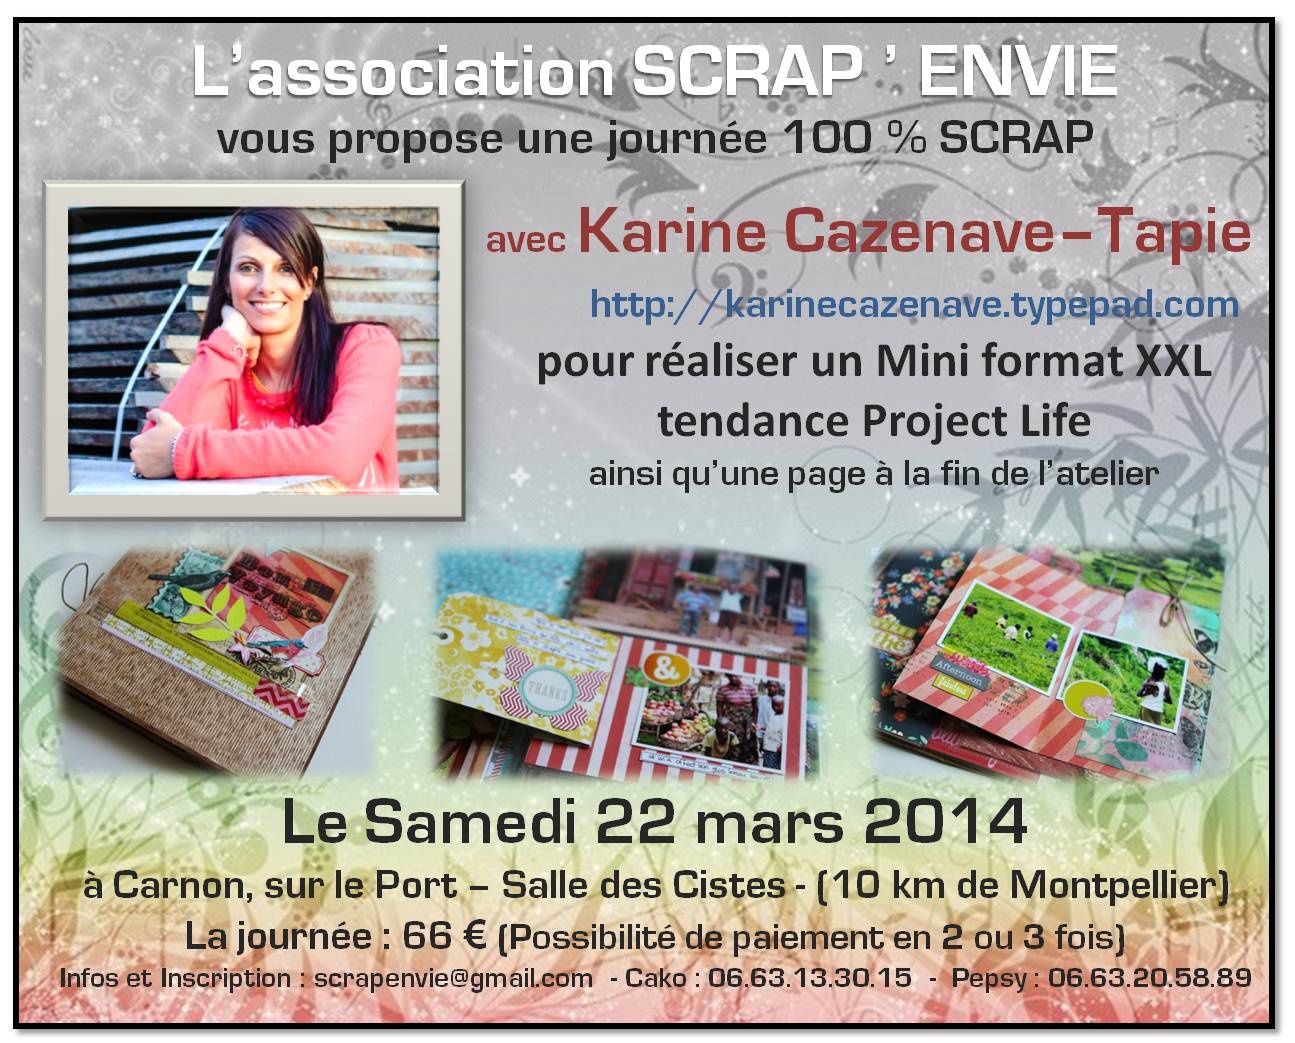 http://img.over-blog-kiwi.com/0/52/73/48/201310/ob_1f5839_affiche-crop-mars-2014-karine-cazenave-tapie.jpg